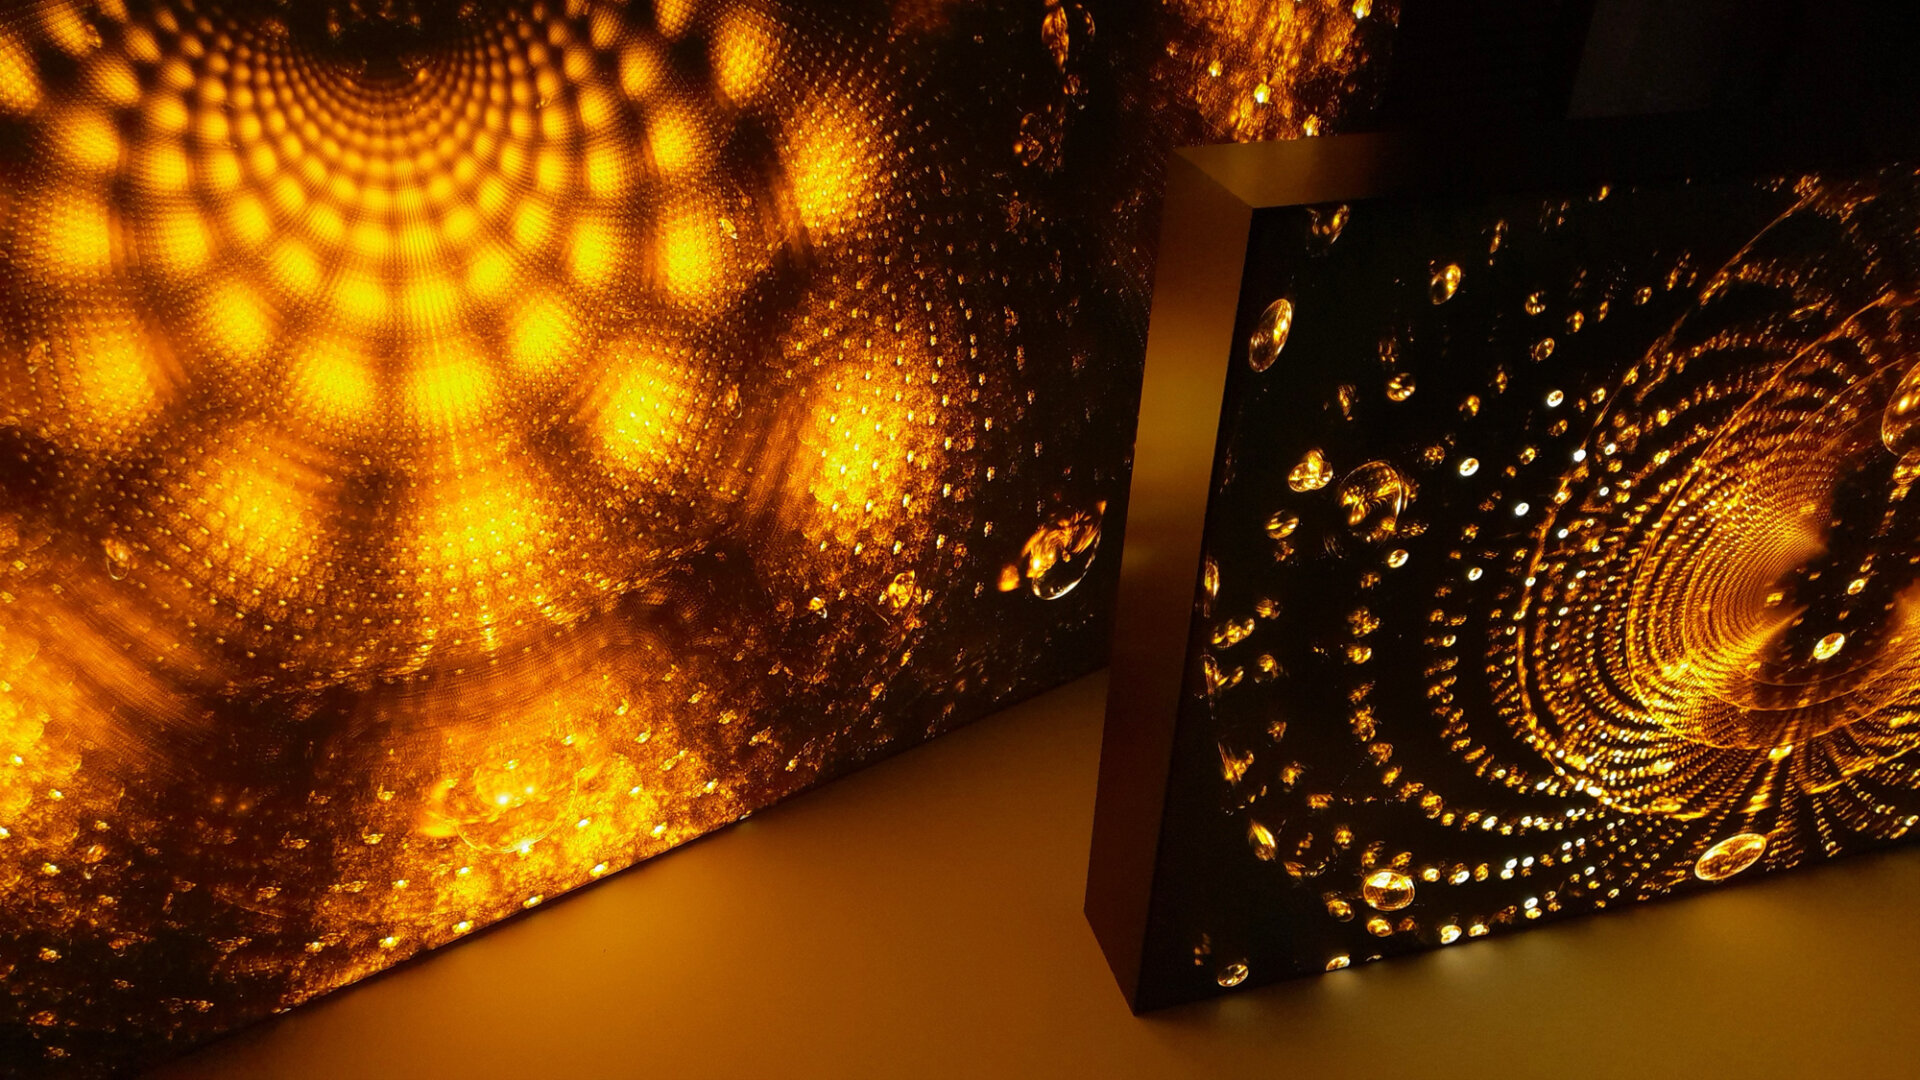 backlit led frames and boxes, cuadros retro-iluminados_fractales